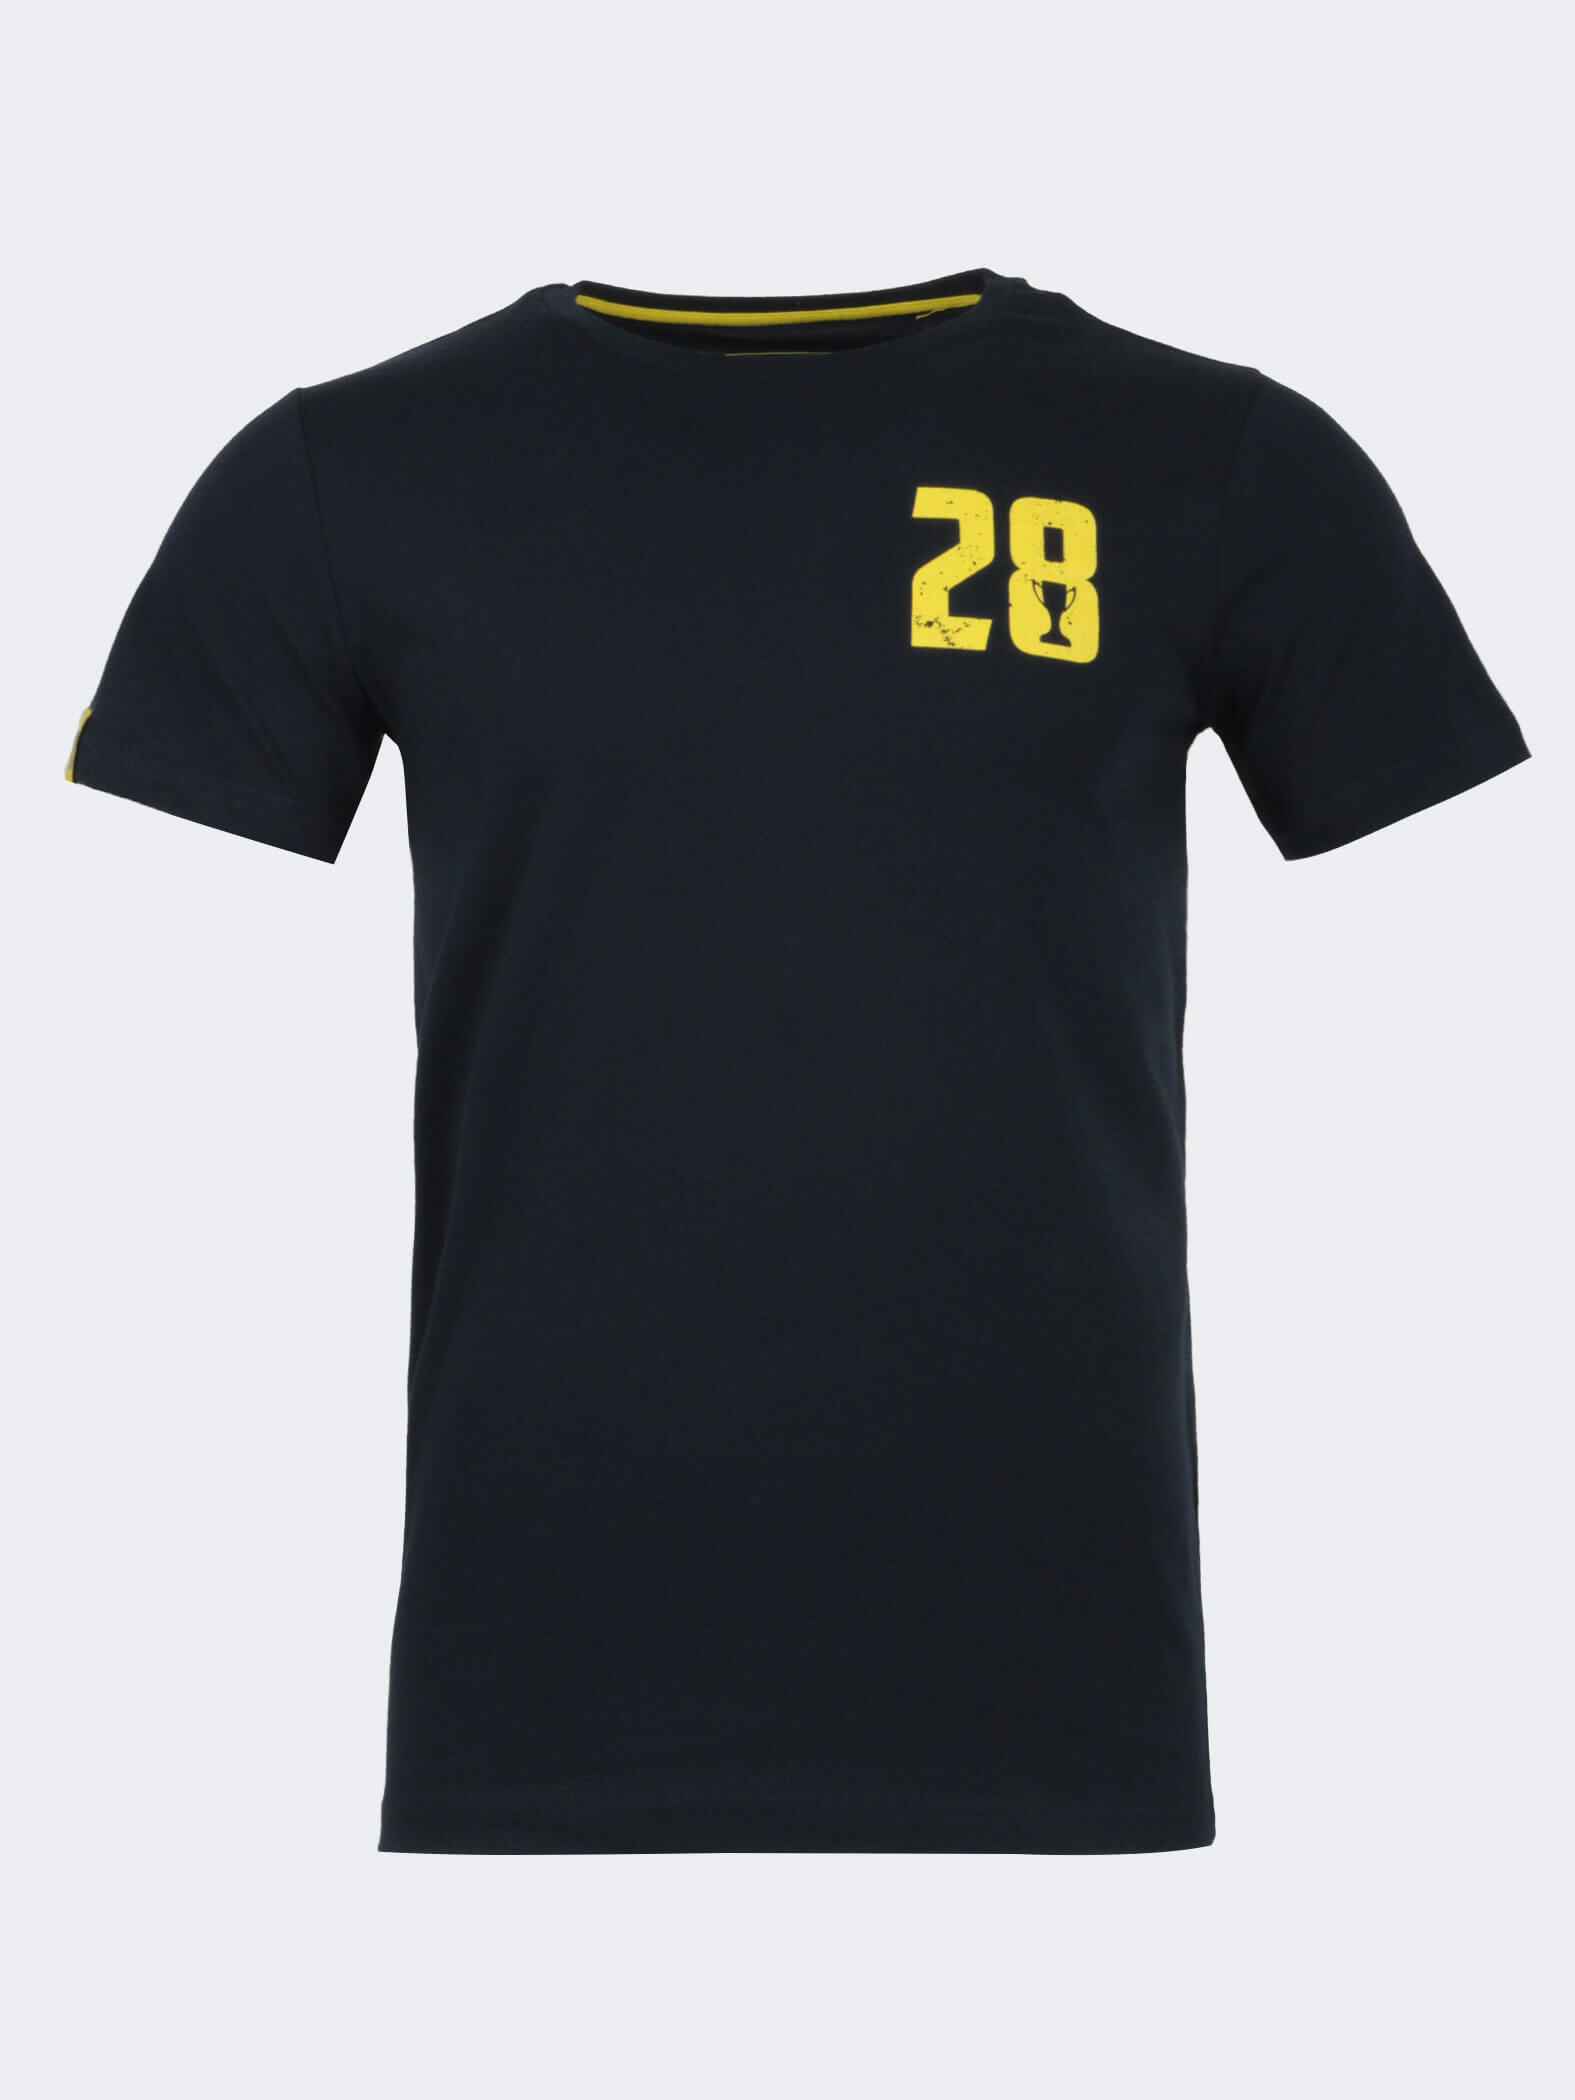 5 Yıldız Lacivert 28 Kupa Tshirt